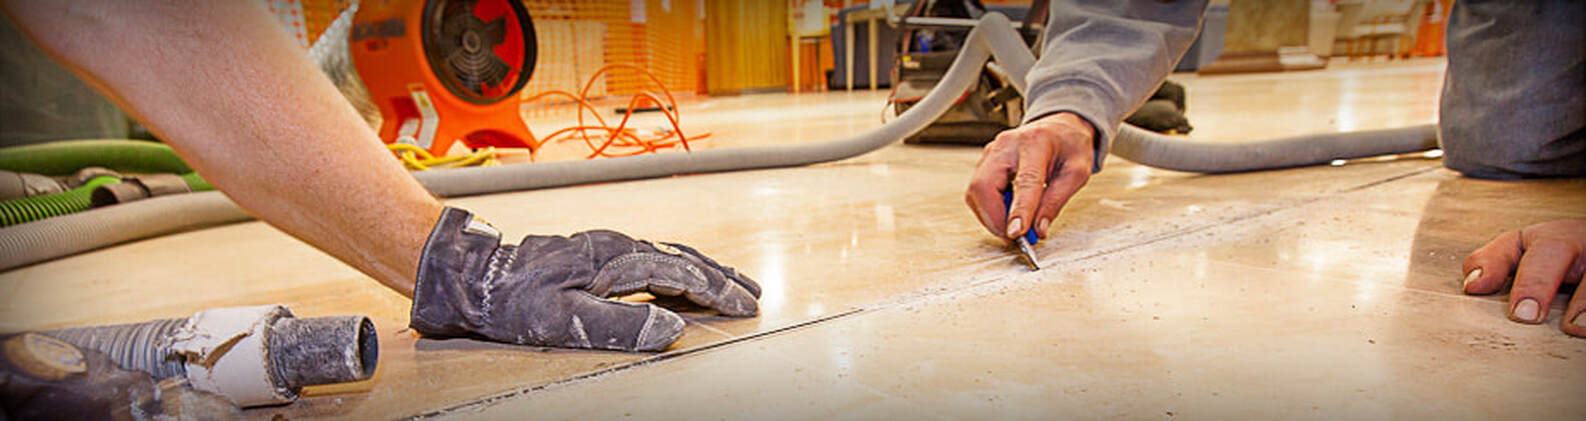 Terrazzo Floor Repair in Cleveland, OH - Cheetah Floor Systems, Inc.